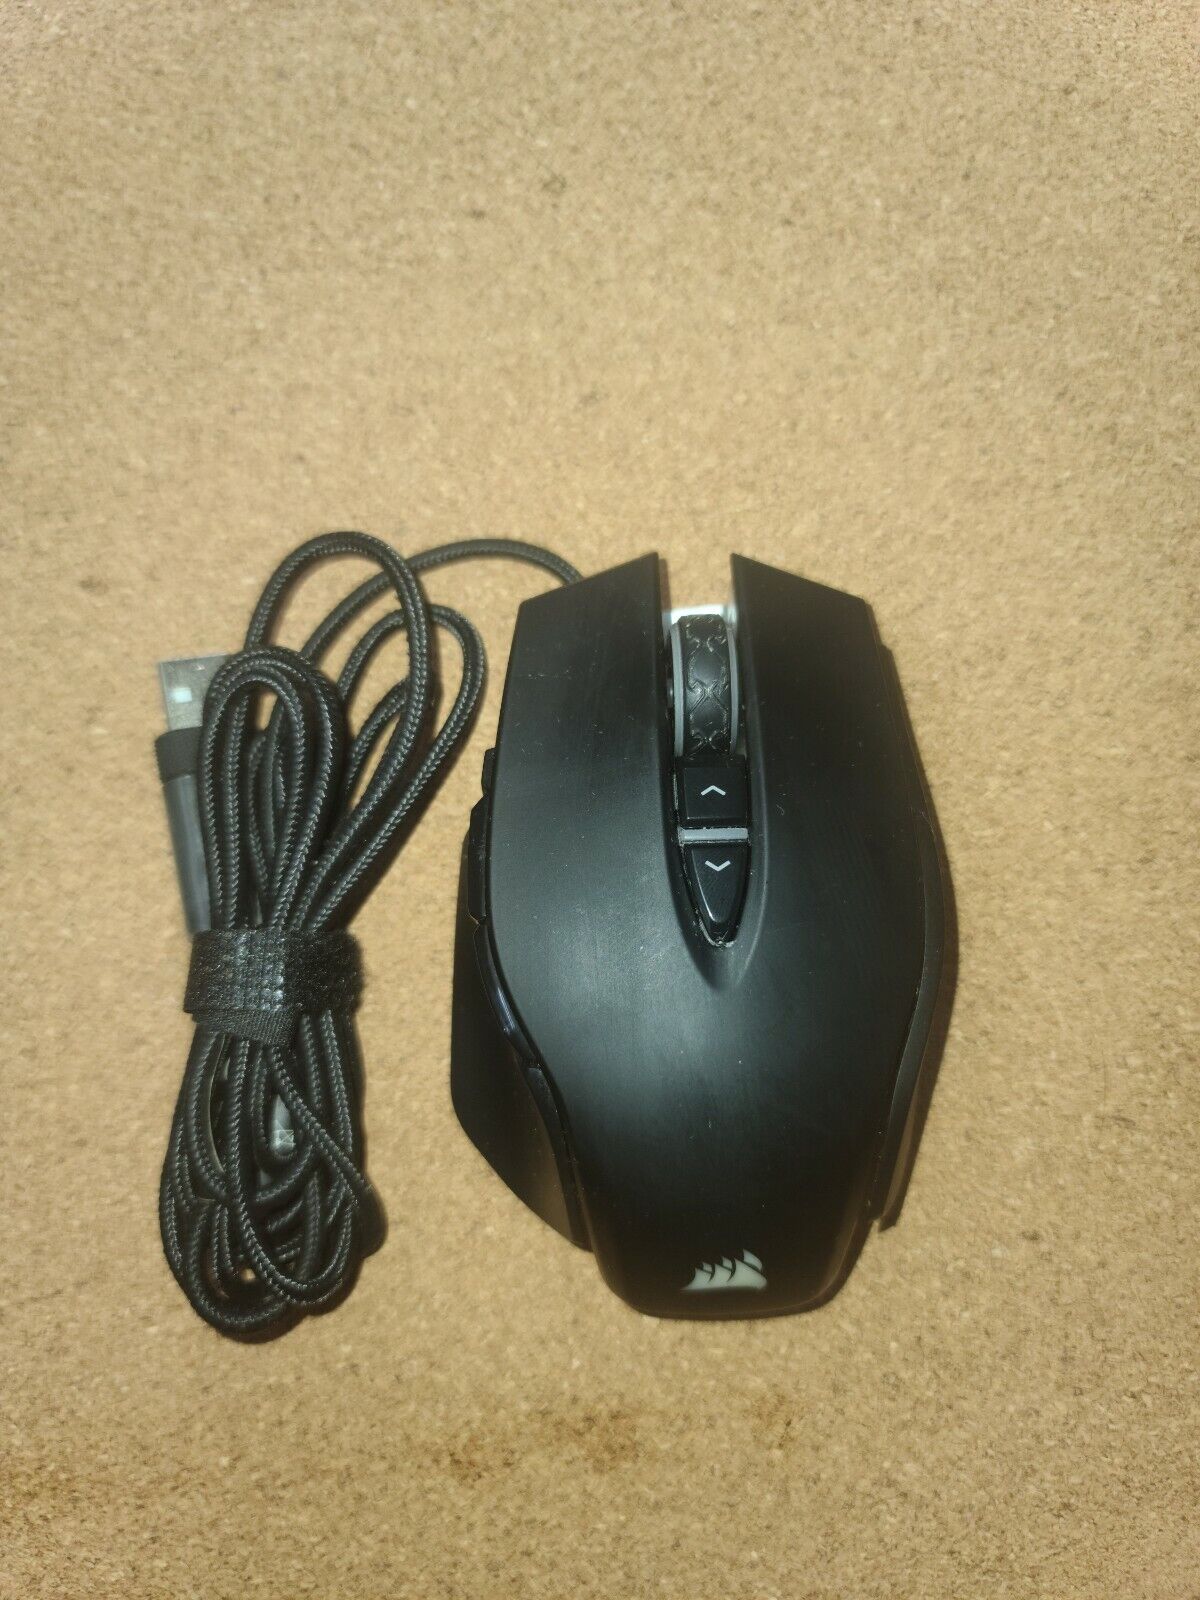 Corsair Gaming mouse + Mechanical Keyboard Combo